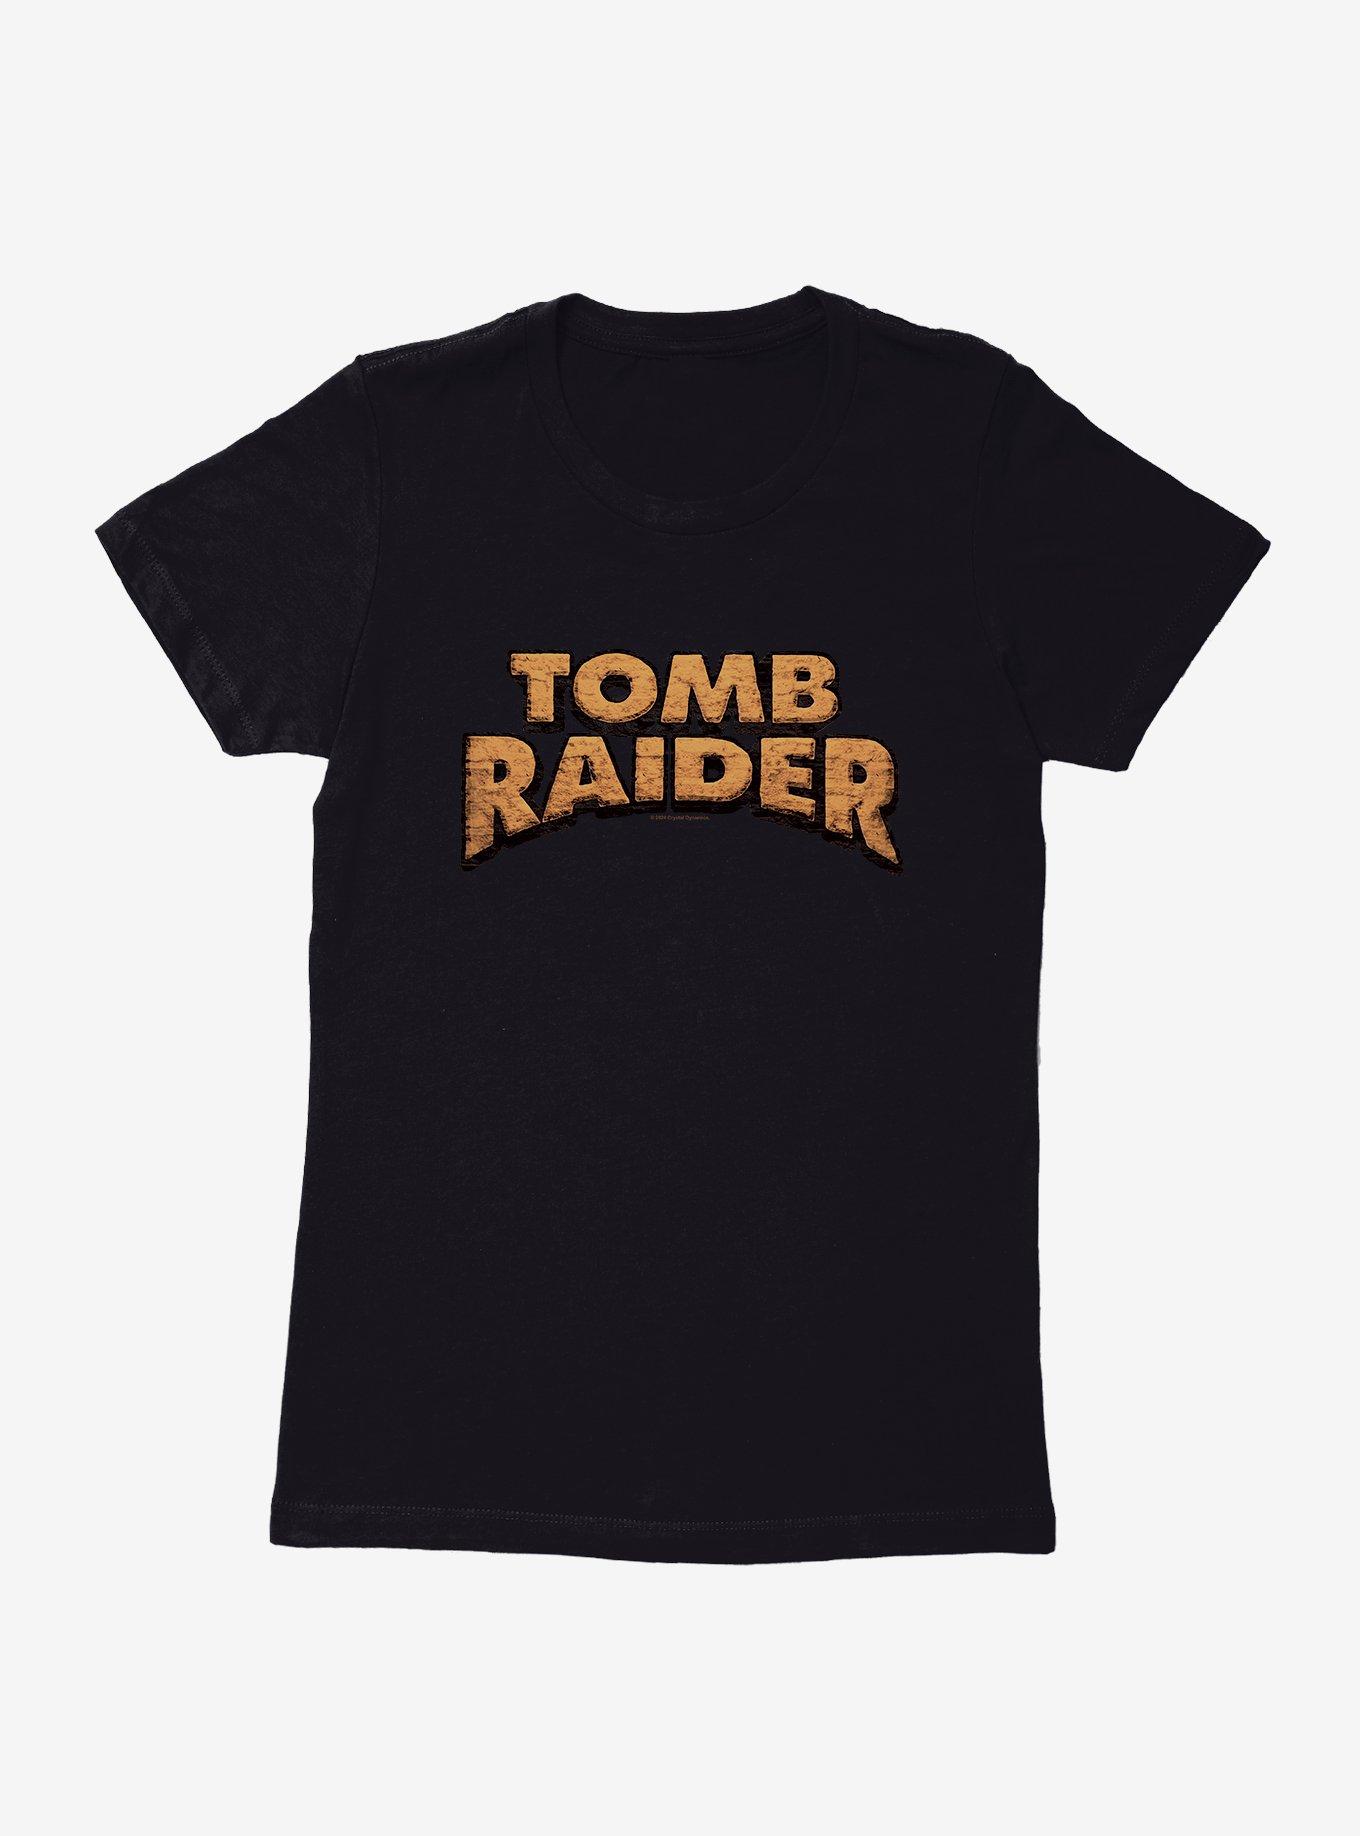 Tomb Raider 1996 Game Cover Womens T-Shirt, , hi-res